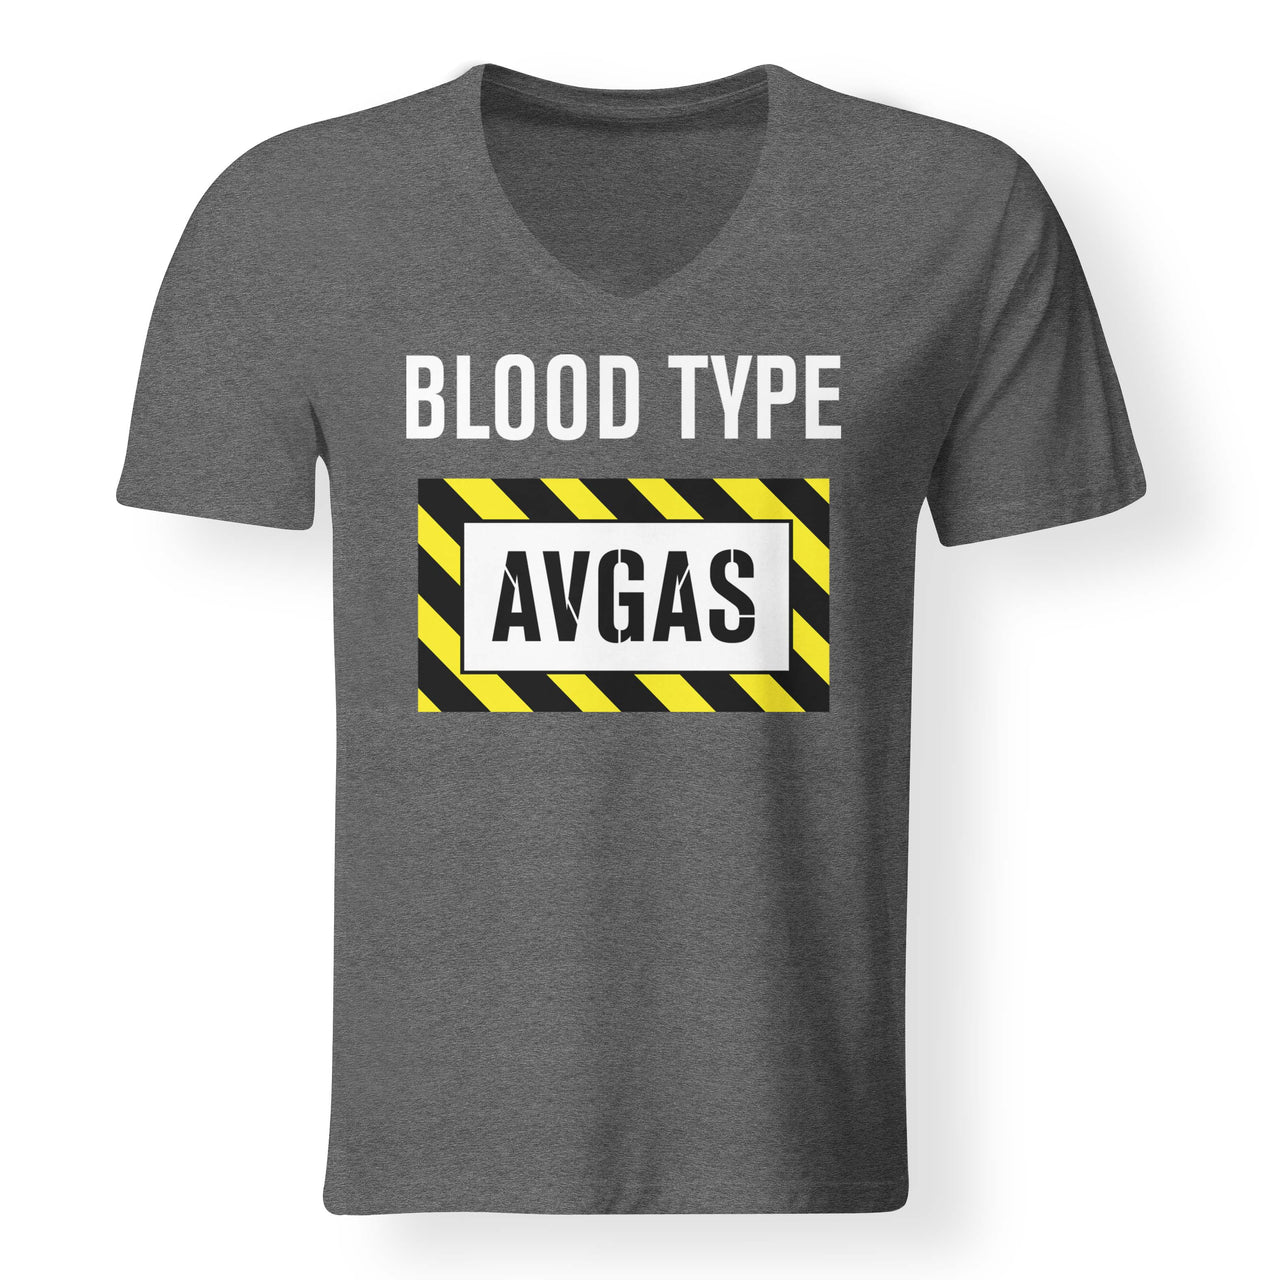 Blood Type AVGAS Designed V-Neck T-Shirts